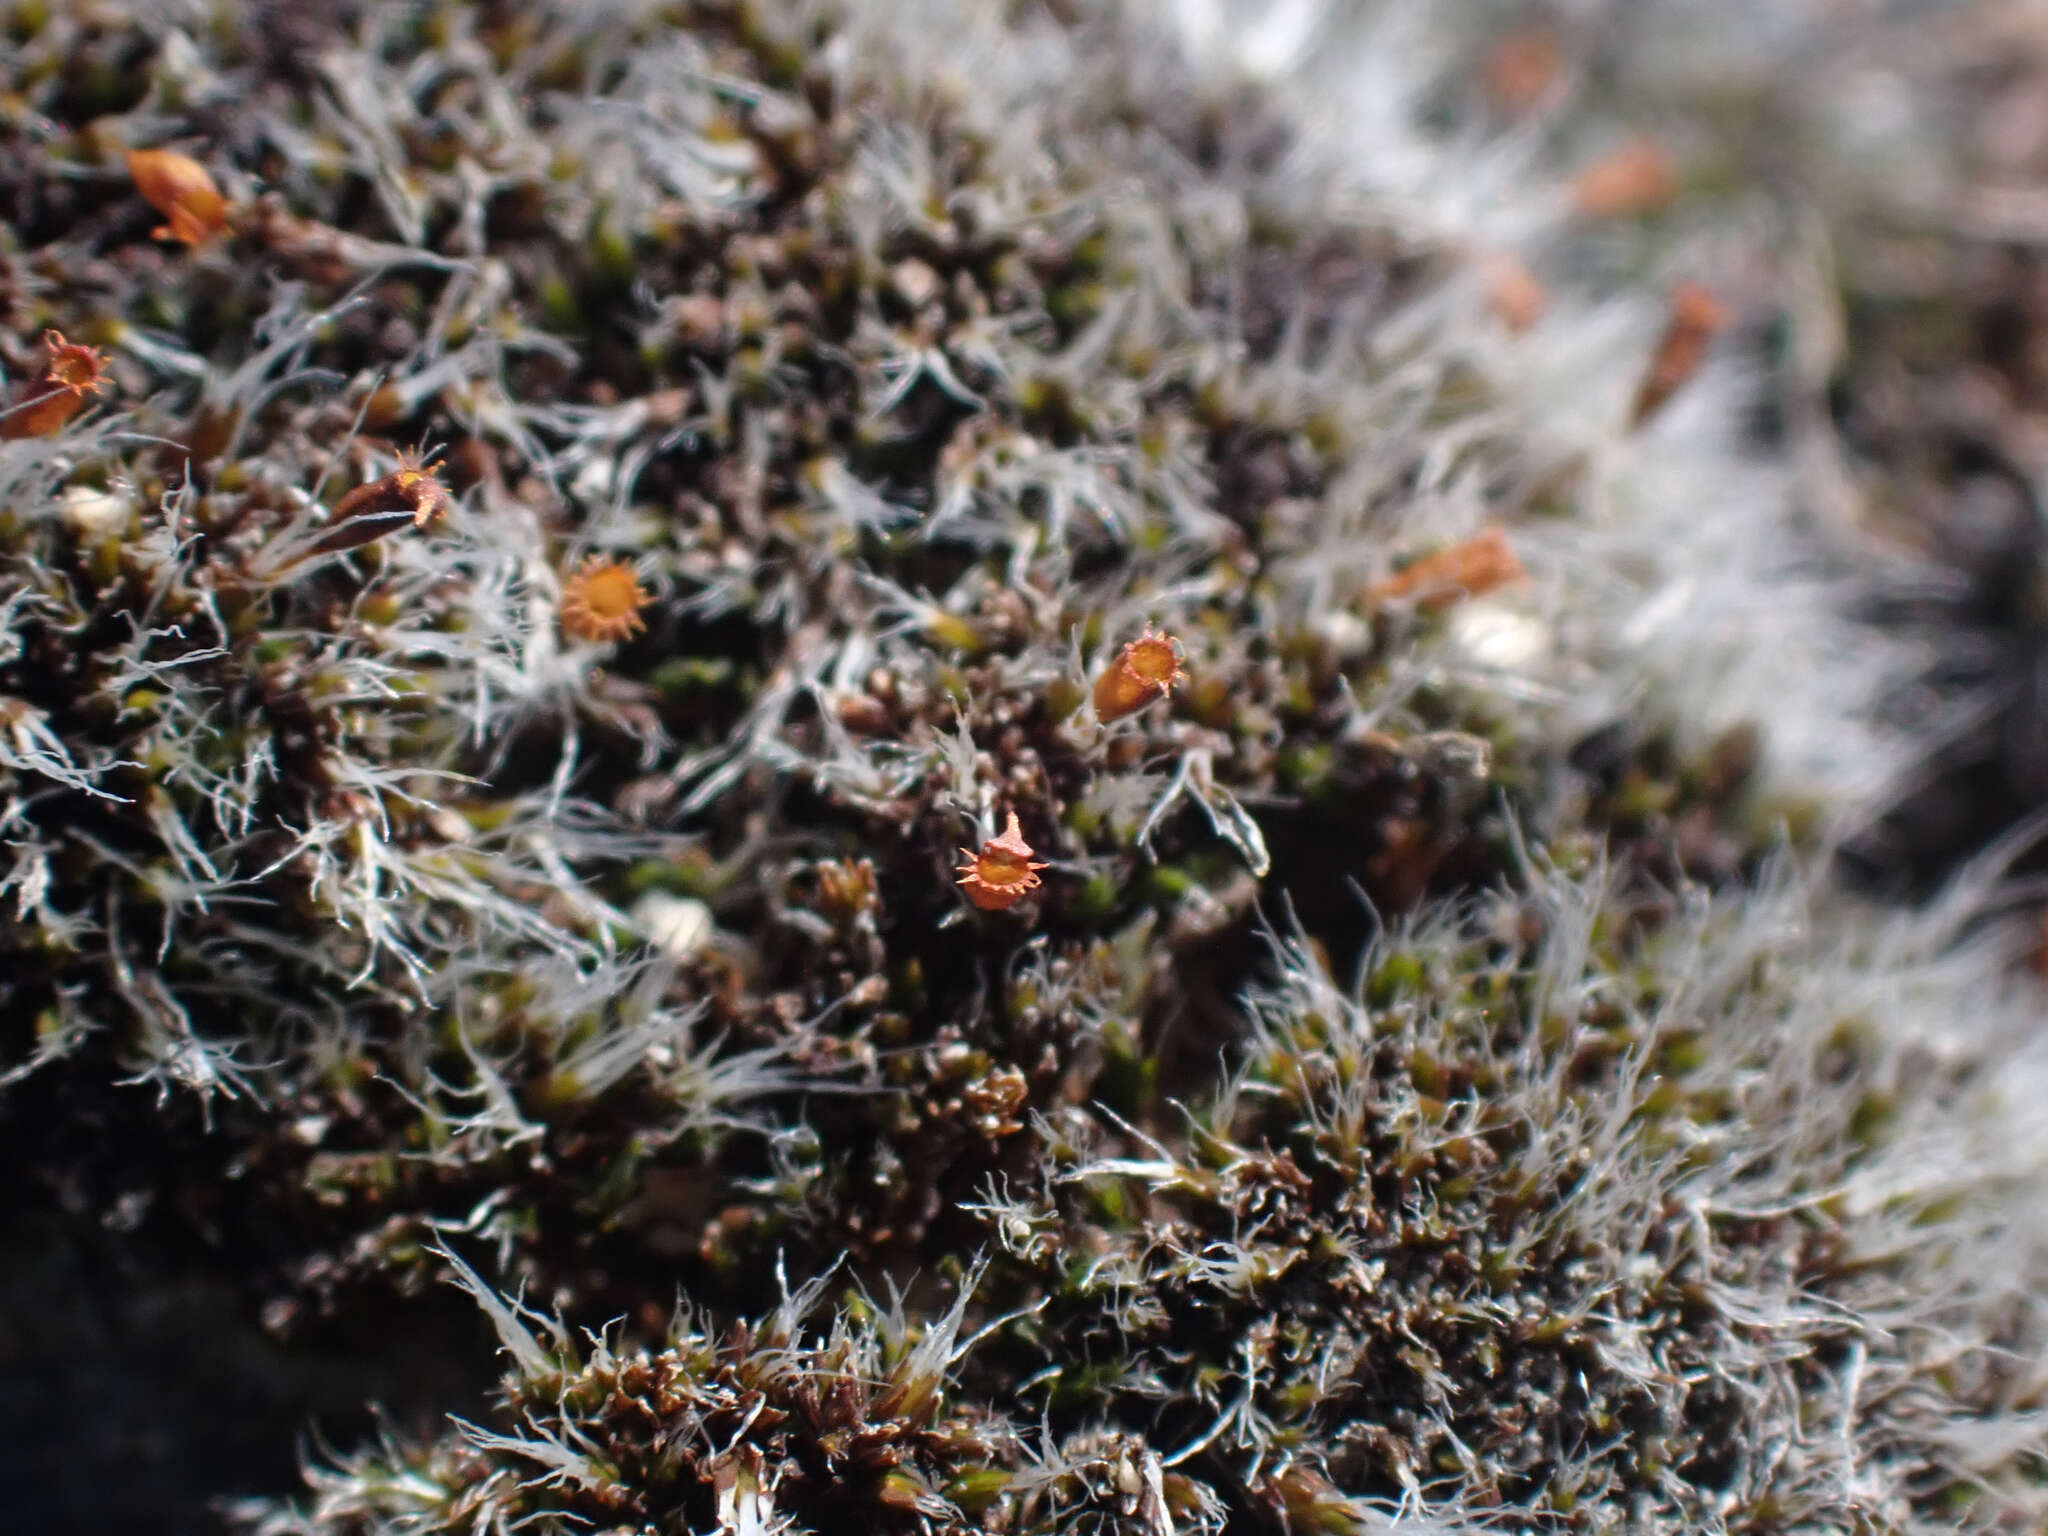 Image of coscinodon moss